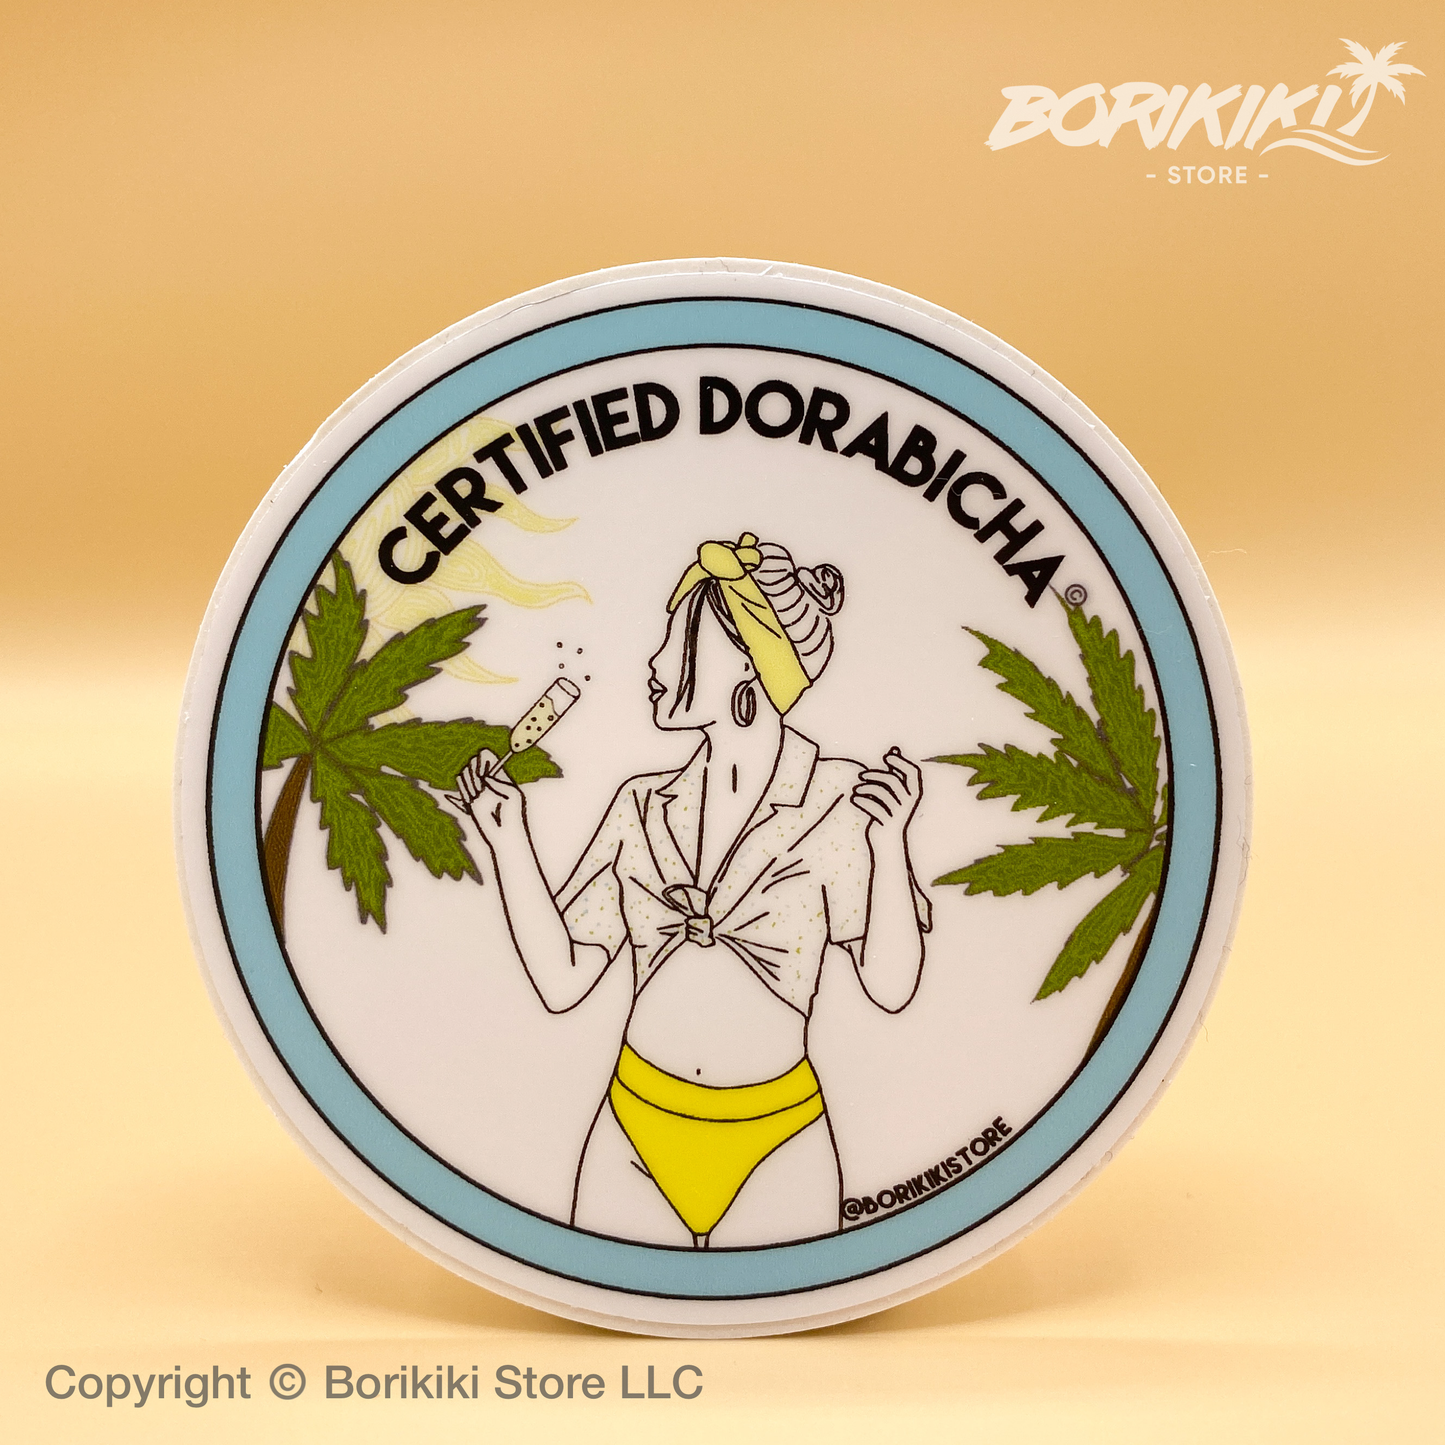 Certified Dorabicha